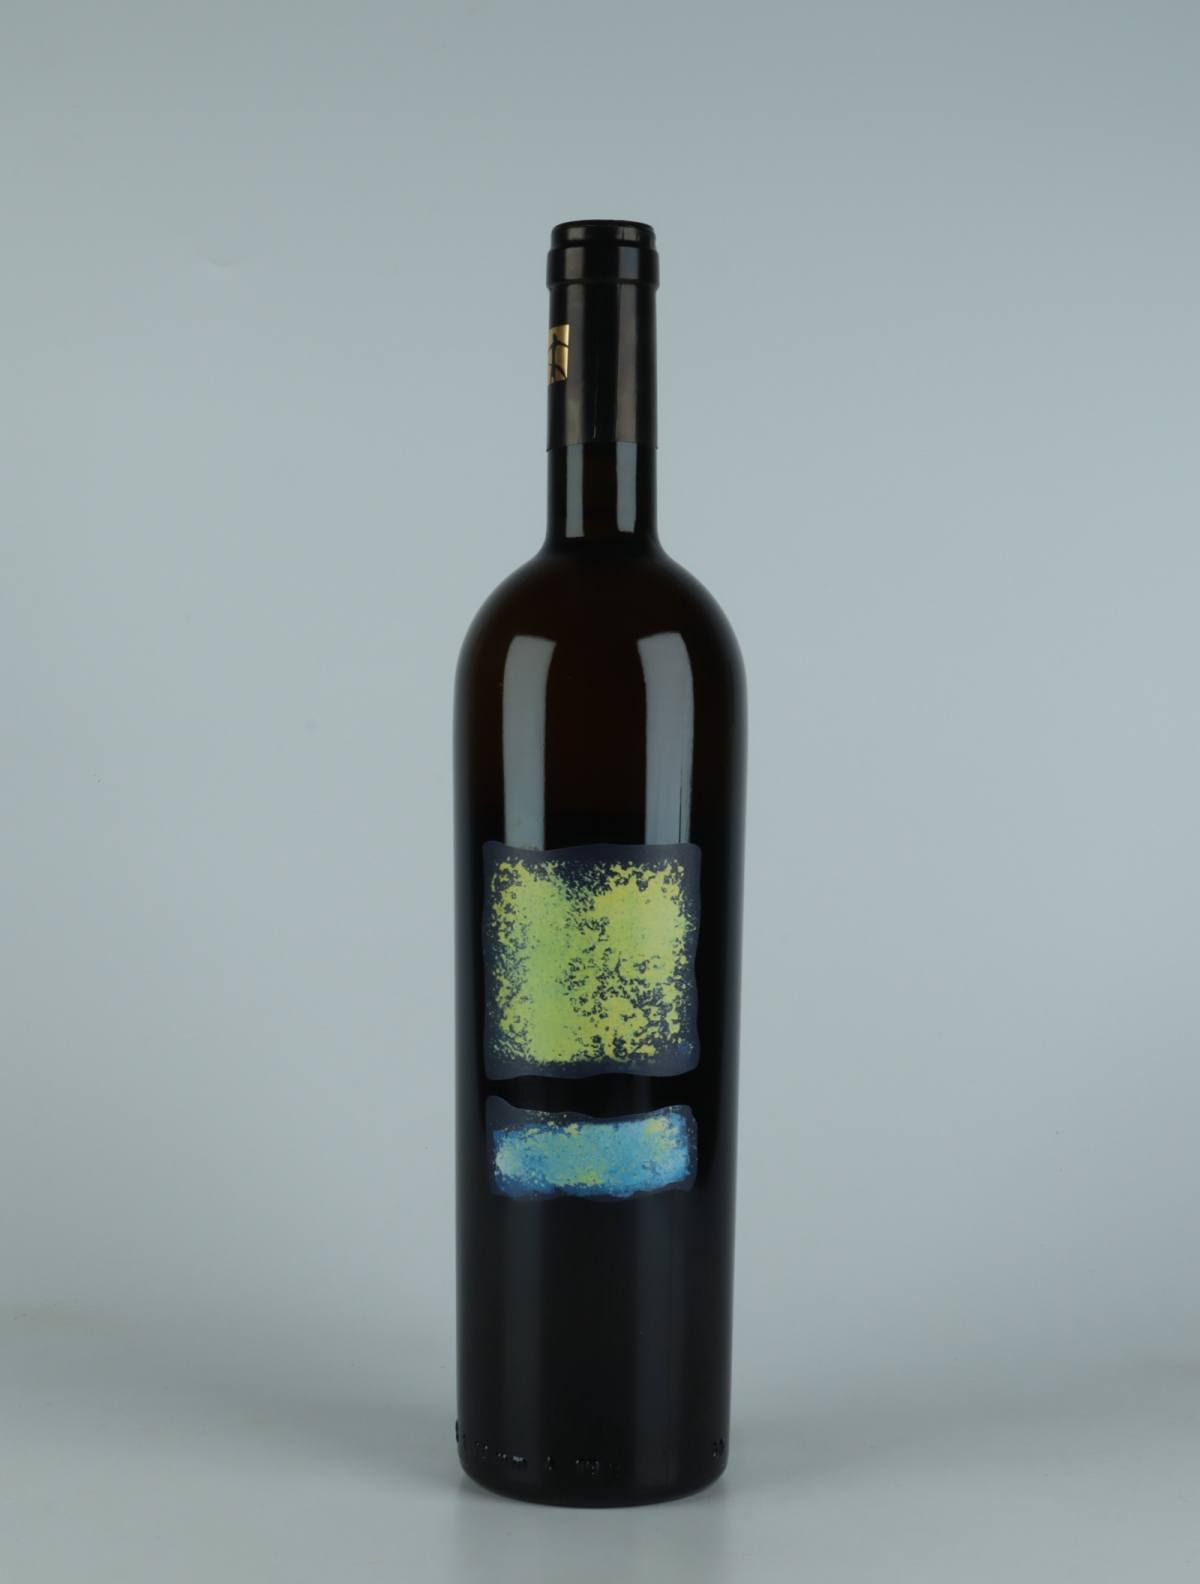 A bottle 2019 VB1 Orange wine from Tenuta Selvadolce, Liguria in Italy